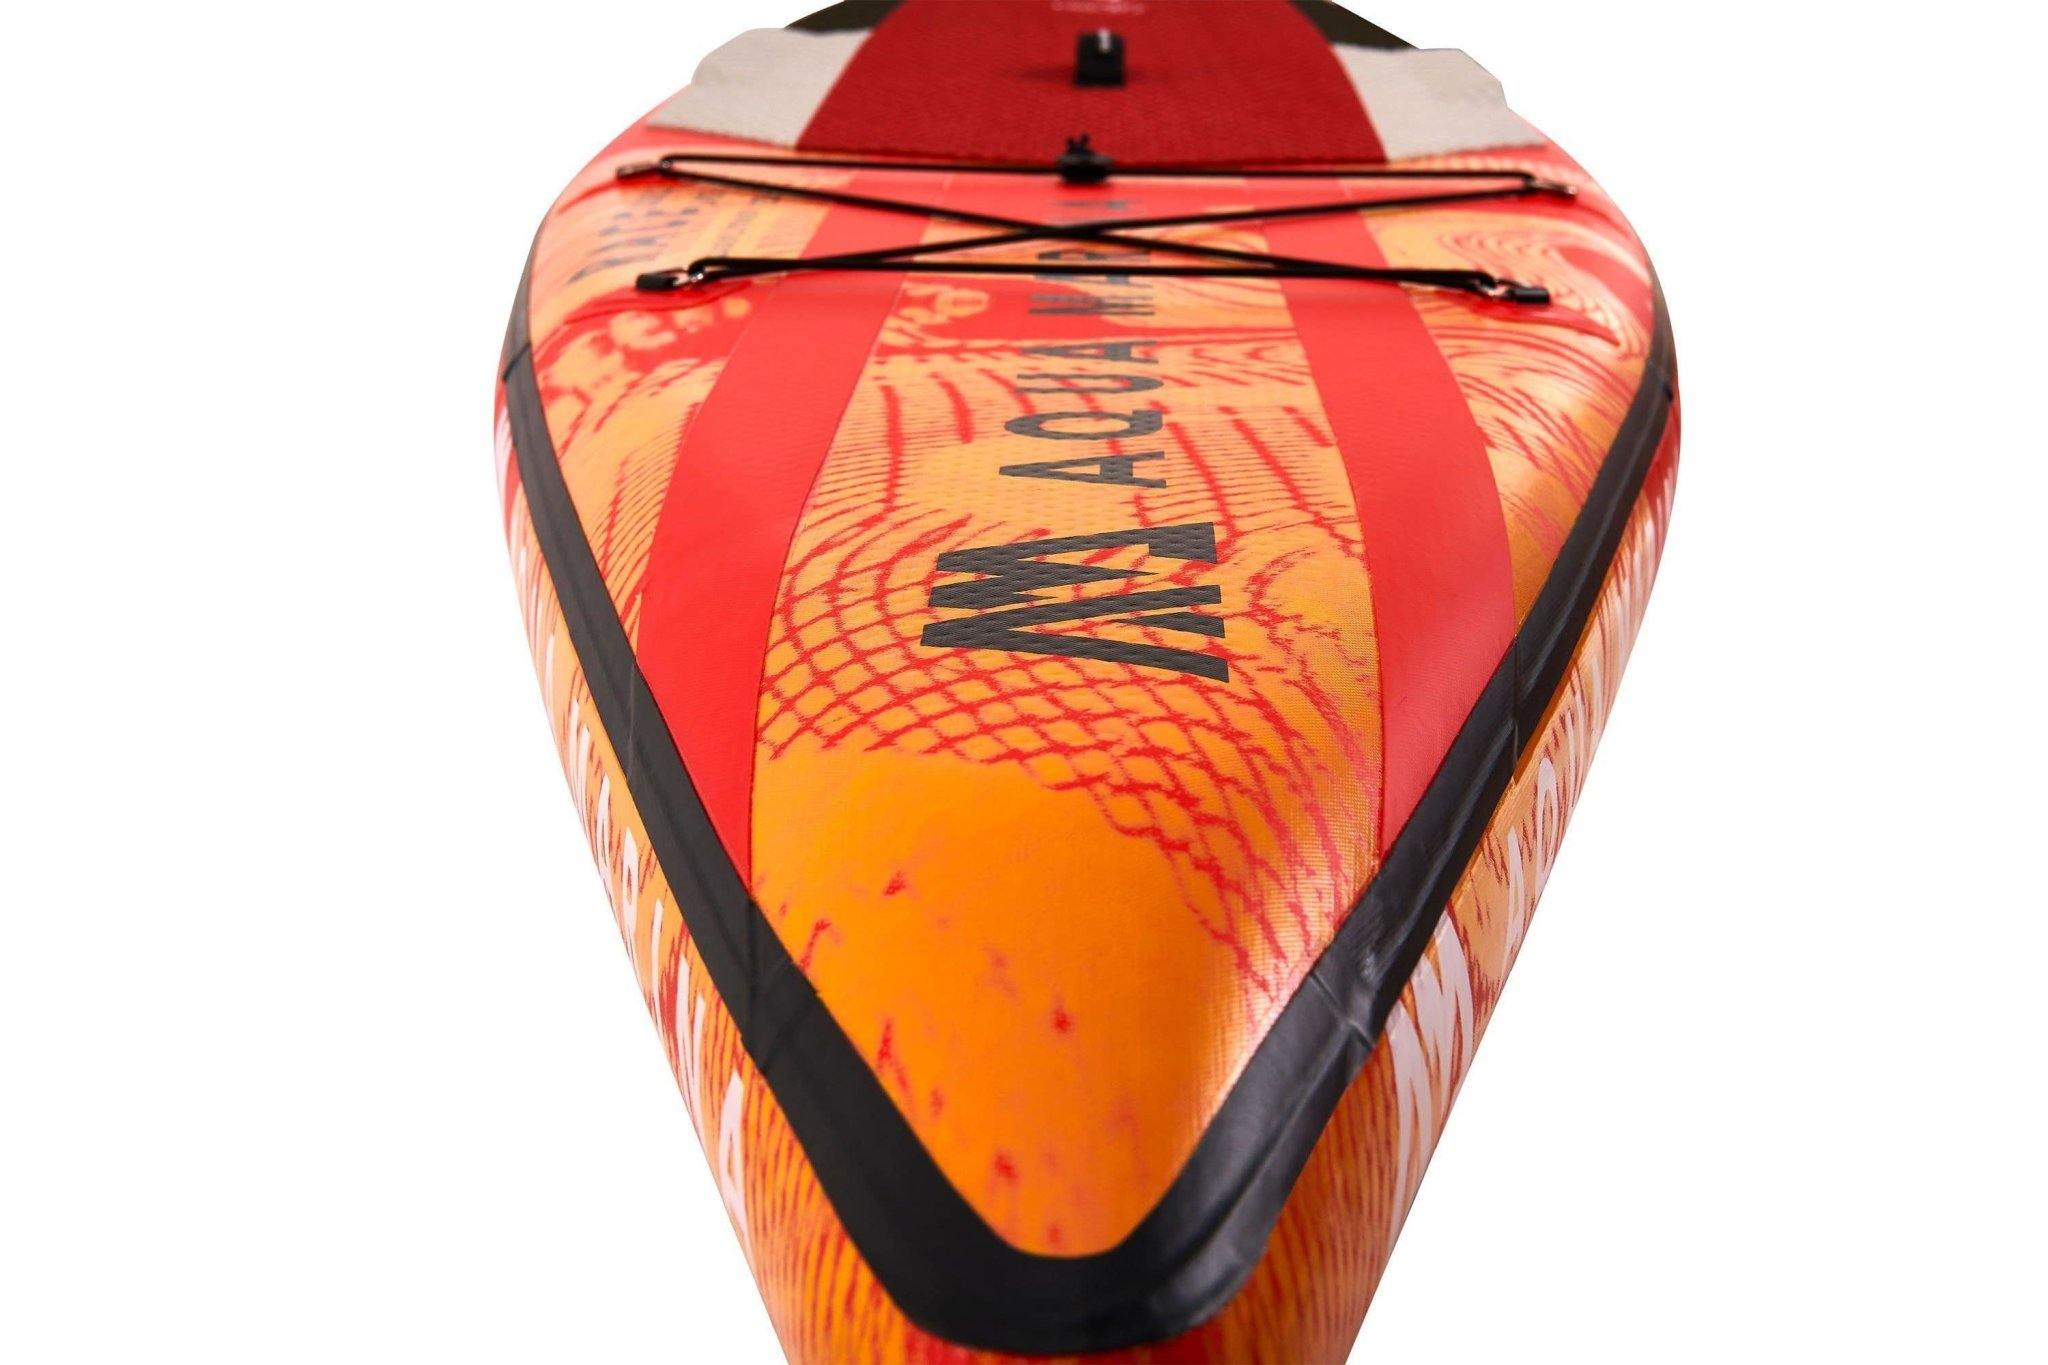 Race 12'6'' Racing iSUP Paddle Board - Dti Direct USA